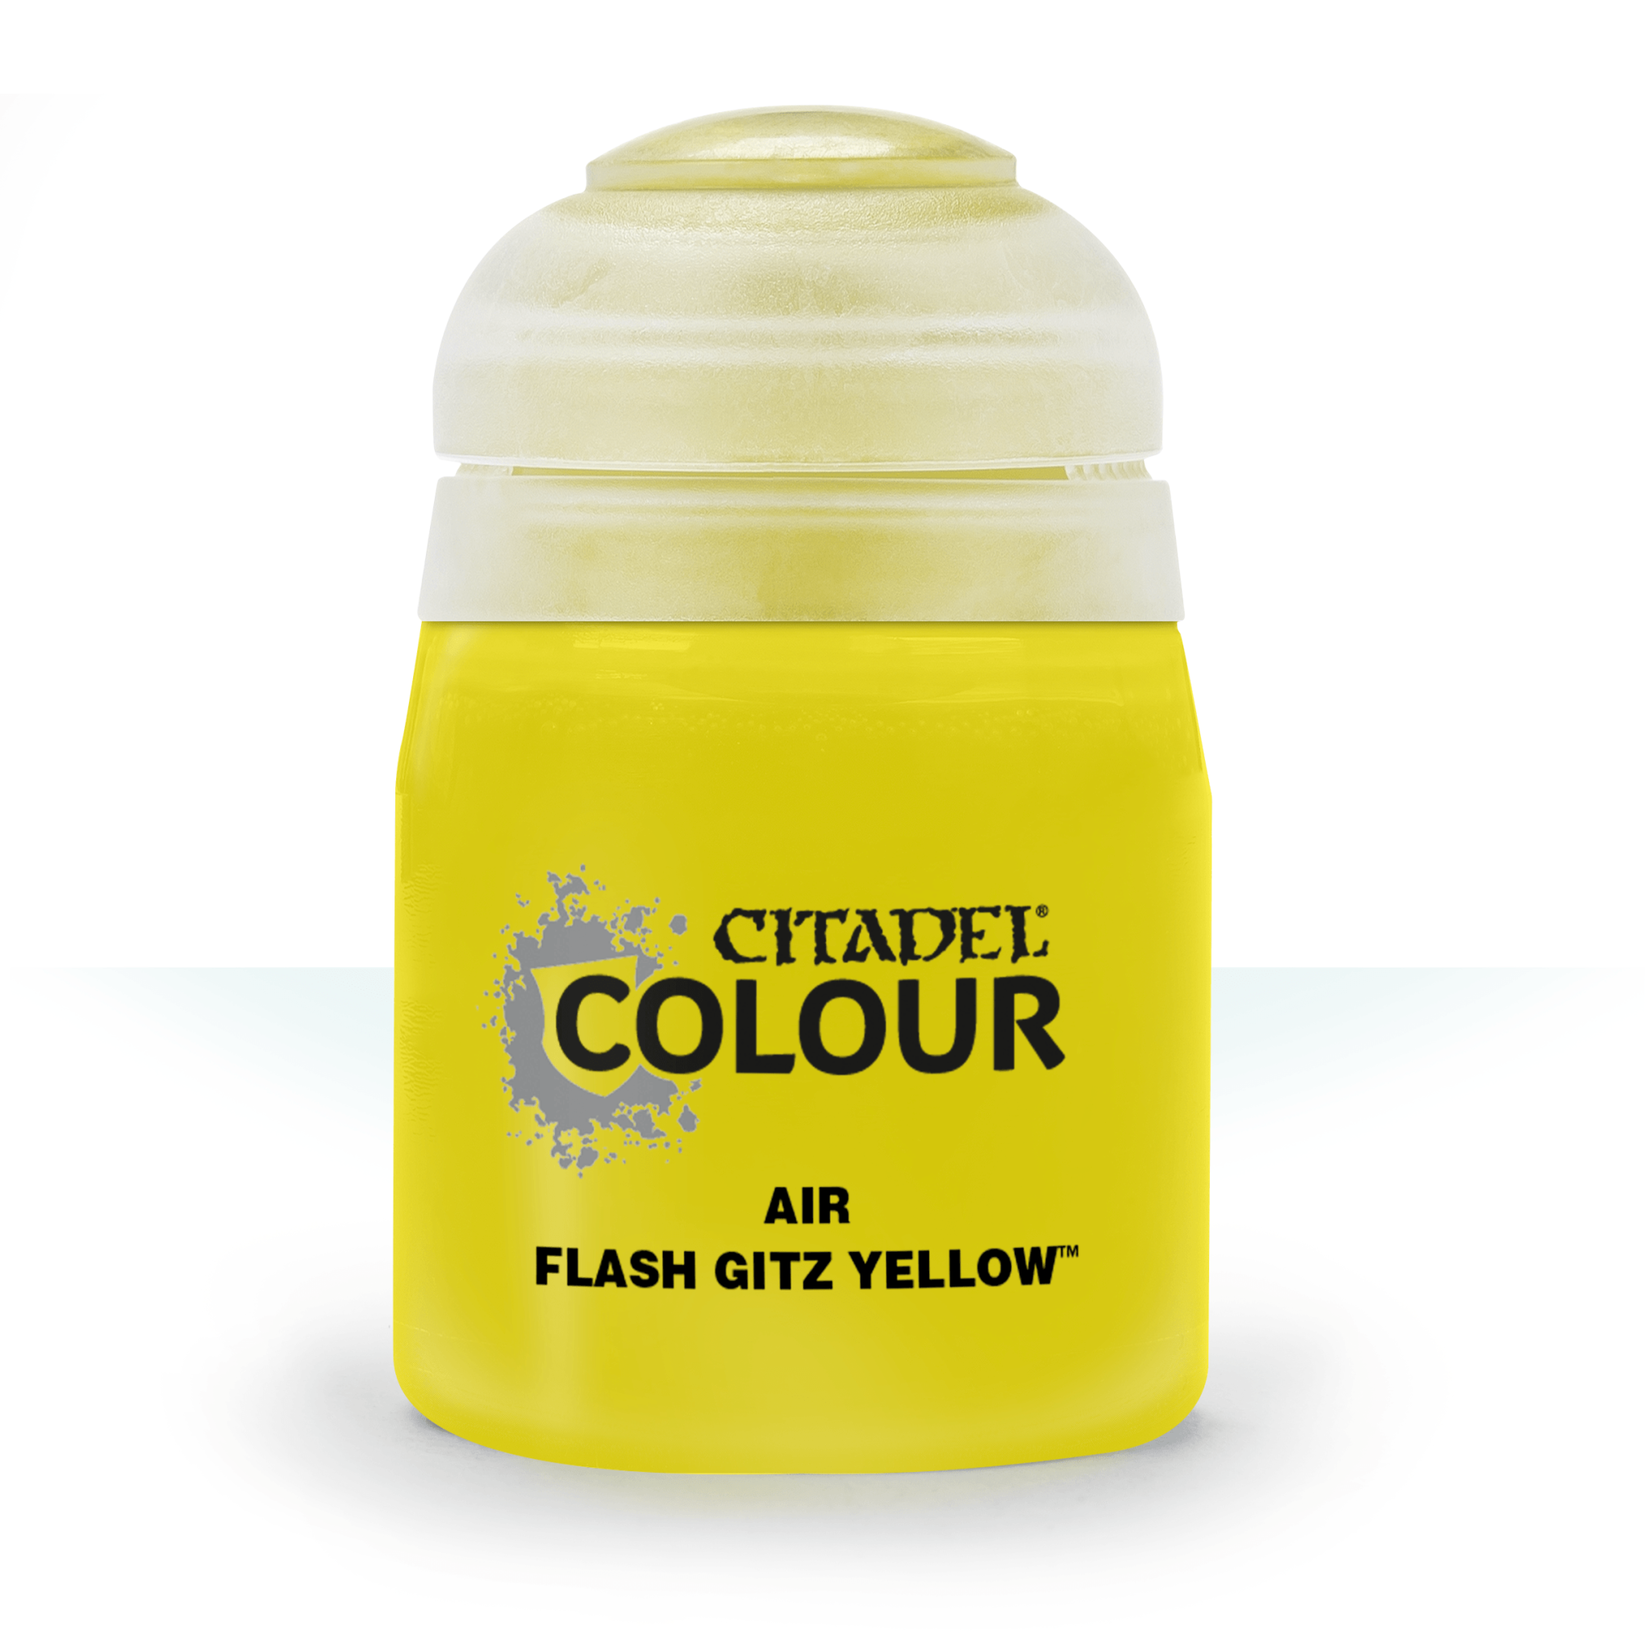 Citadel Air Flash Gitz Yellow 24ml pot Air